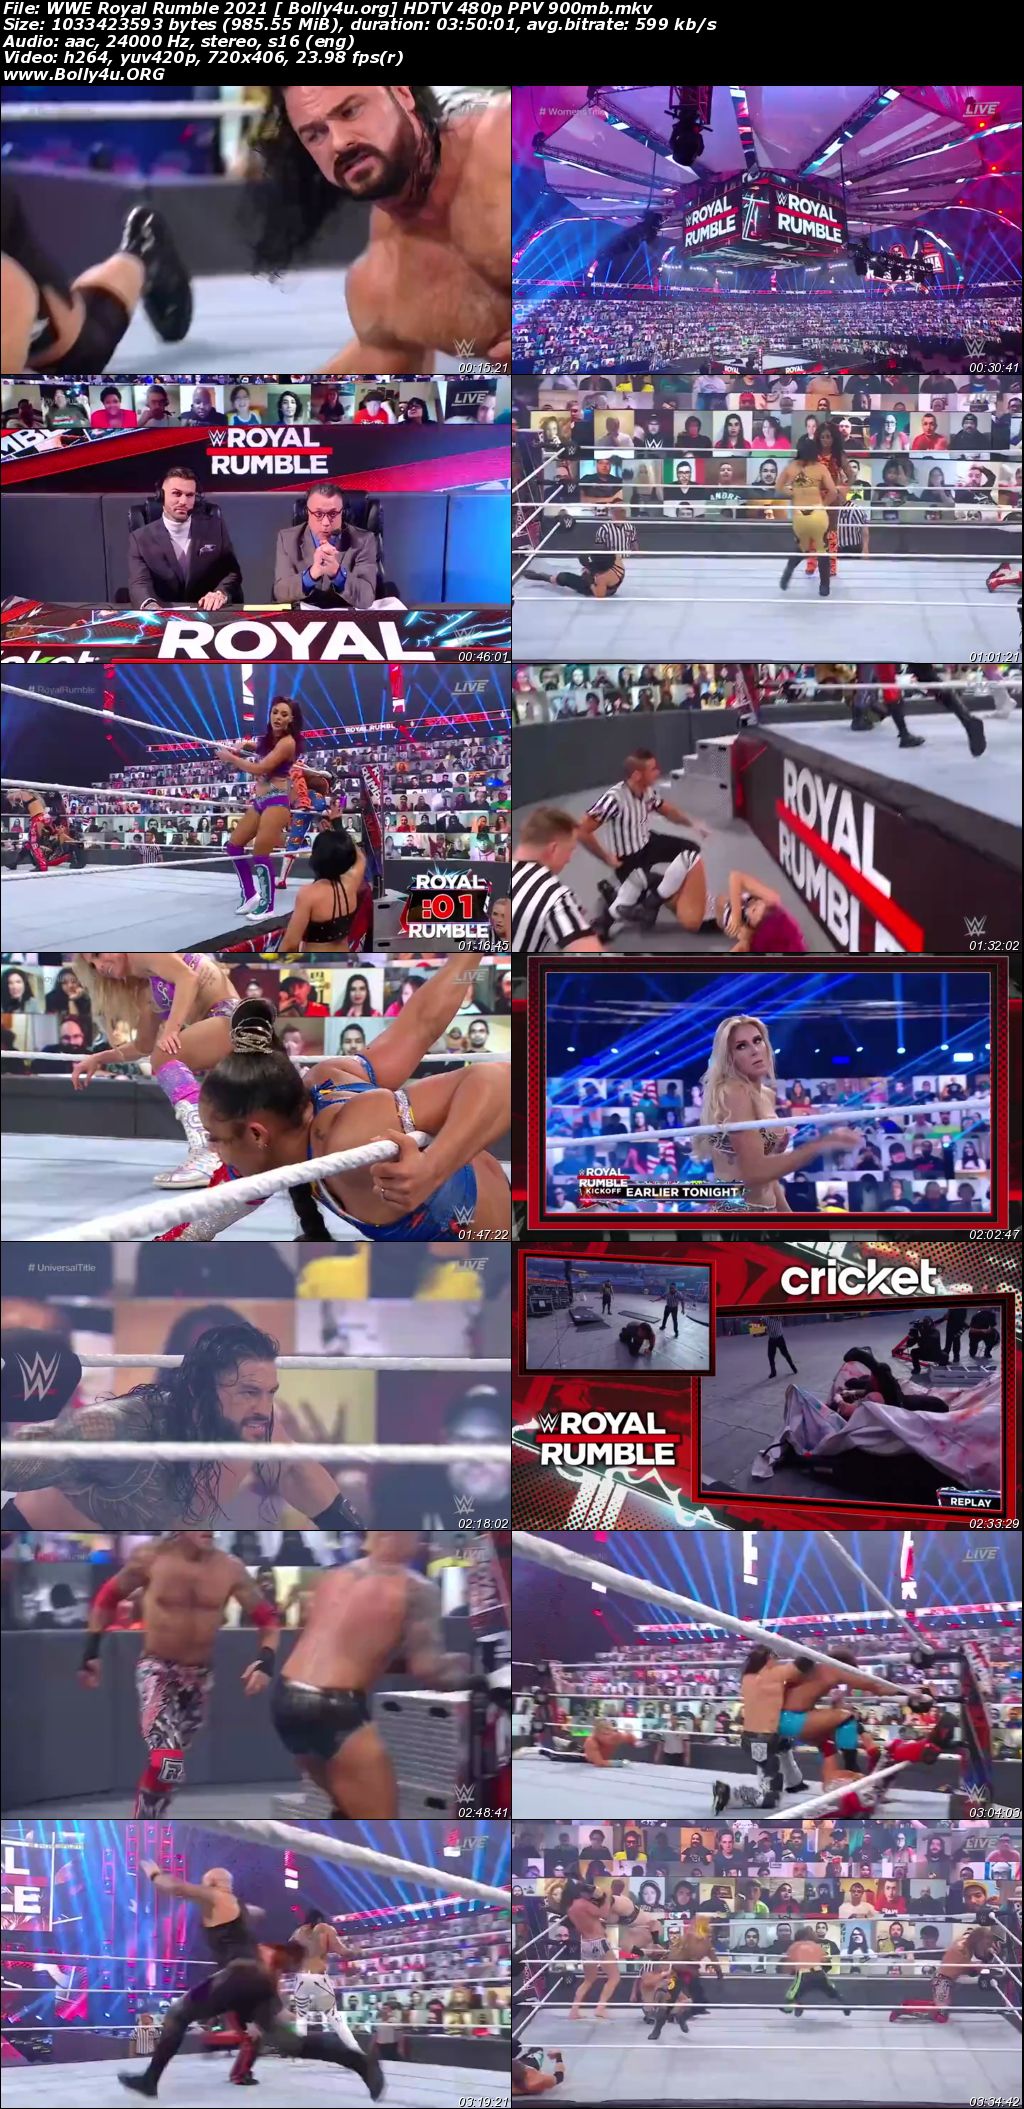 WWE Royal Rumble 2021 HDTV 950Mb 480p PPV x264 Download